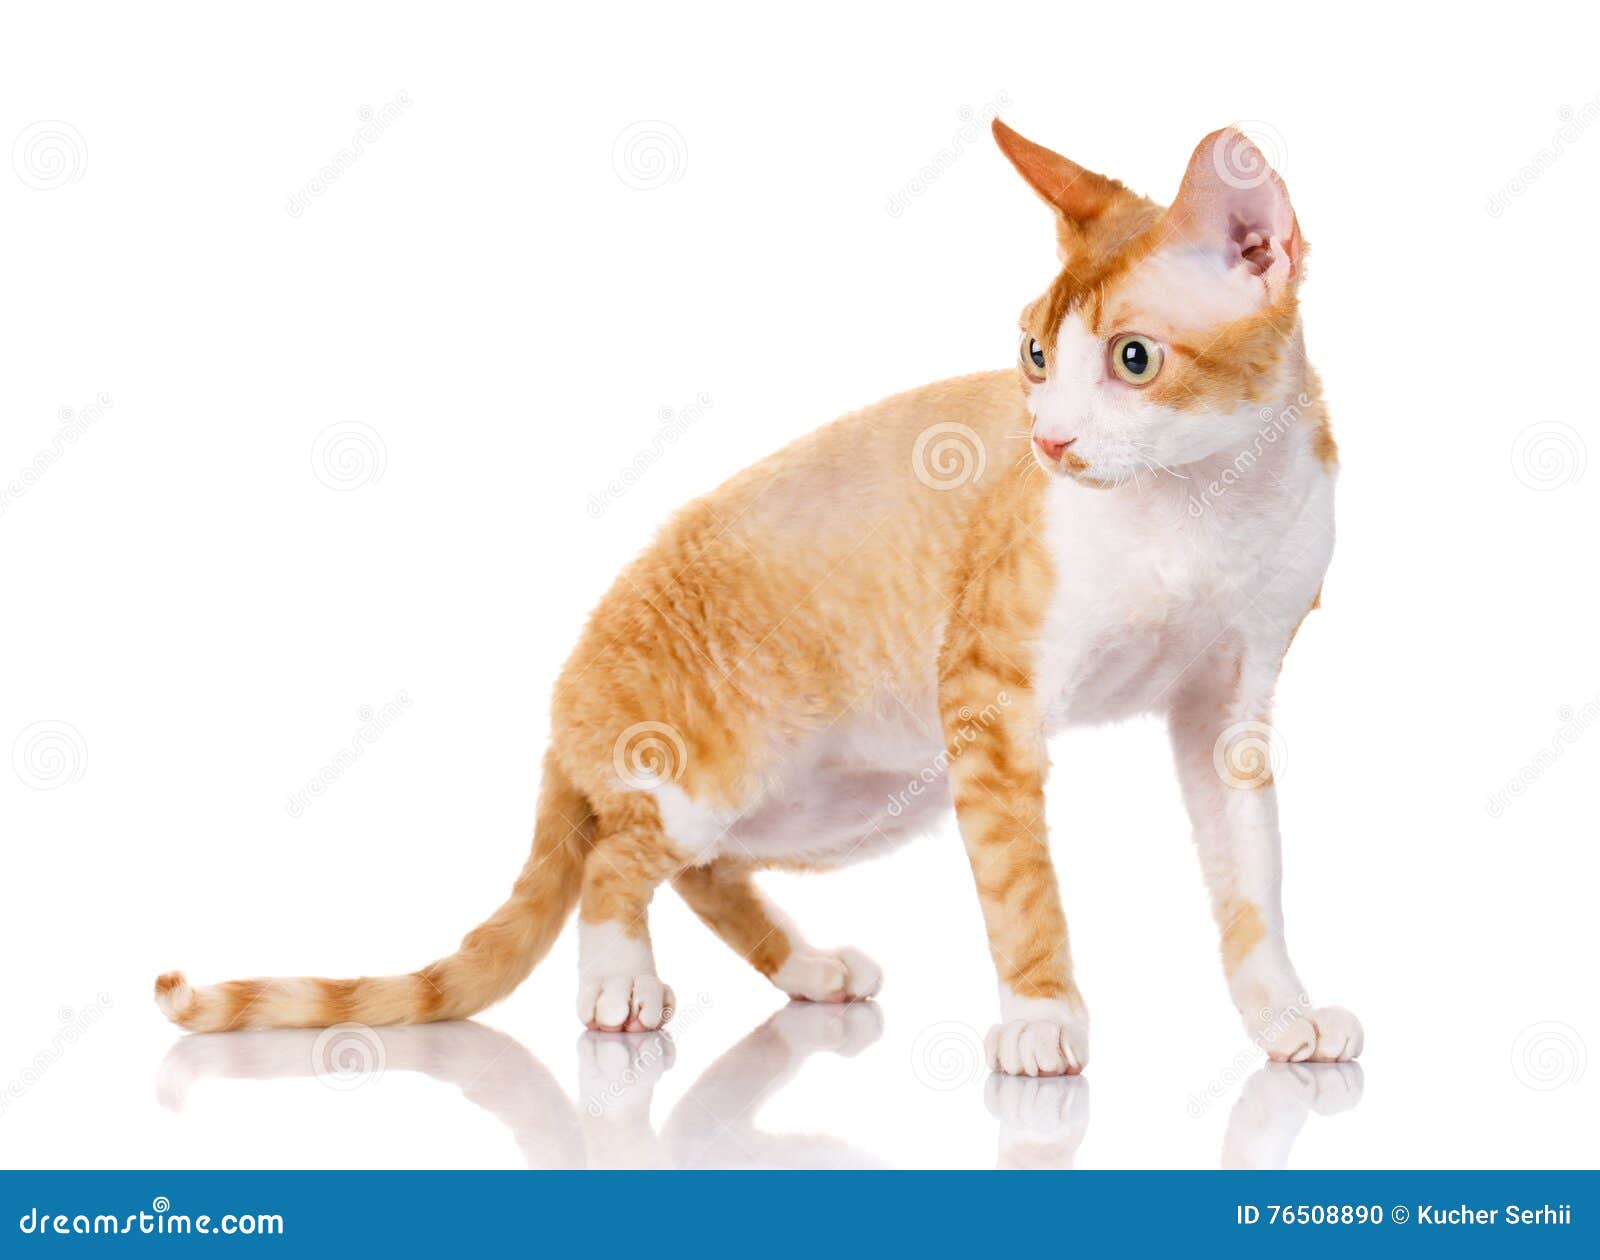  Orange Devon Rex  Cat With Big Ears Looking Aside On White 